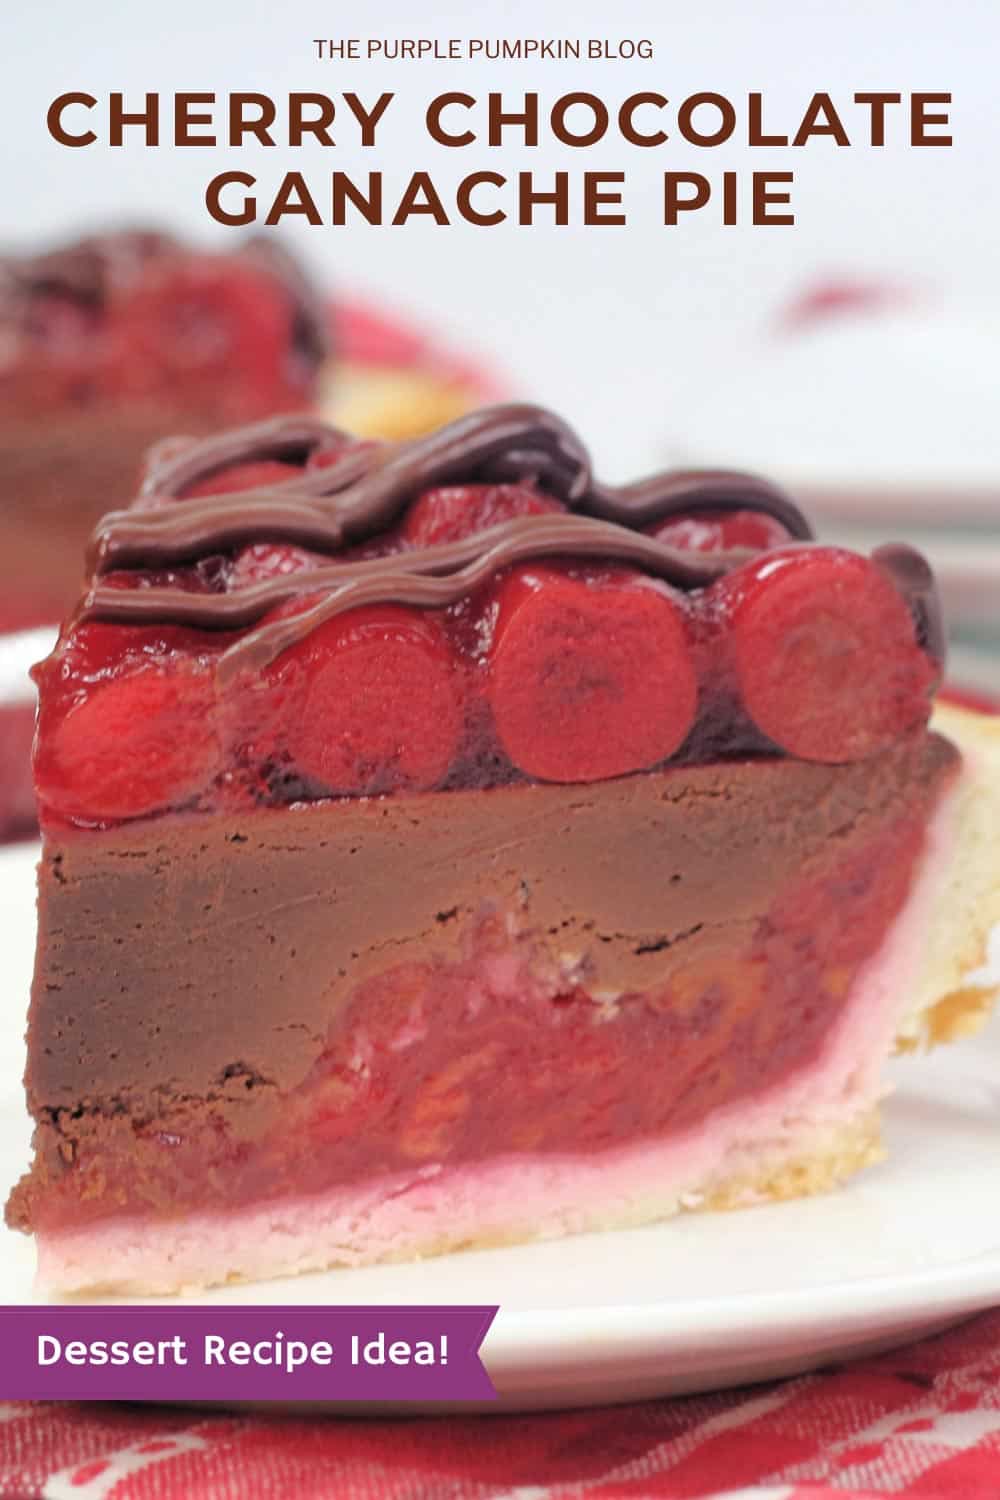 Cherry-Chocolate-Ganache-Pie-Dessert-Recipe-Idea